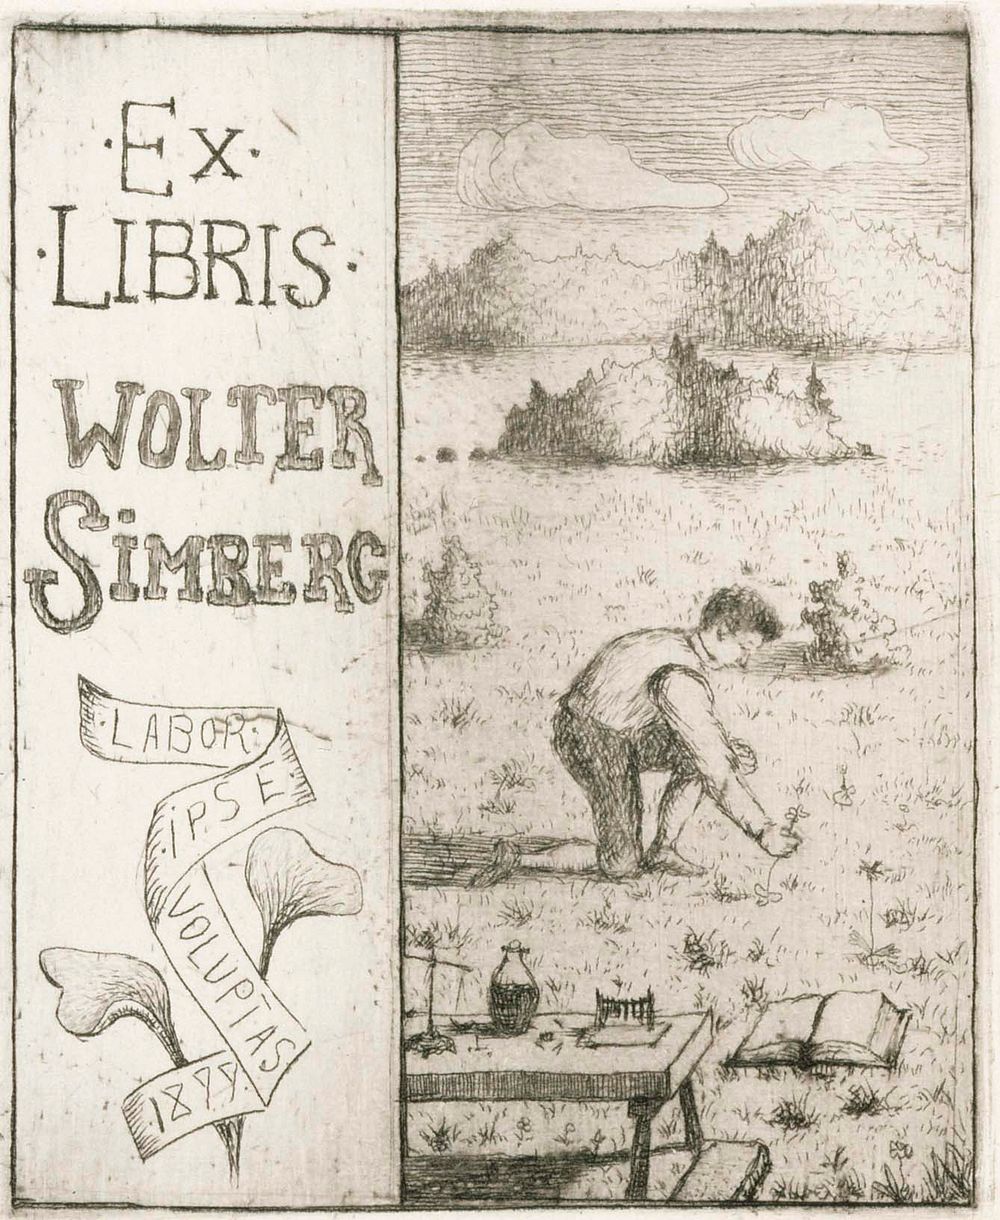 Exlibris wolter simberg ii, 1899, by Hugo Simberg